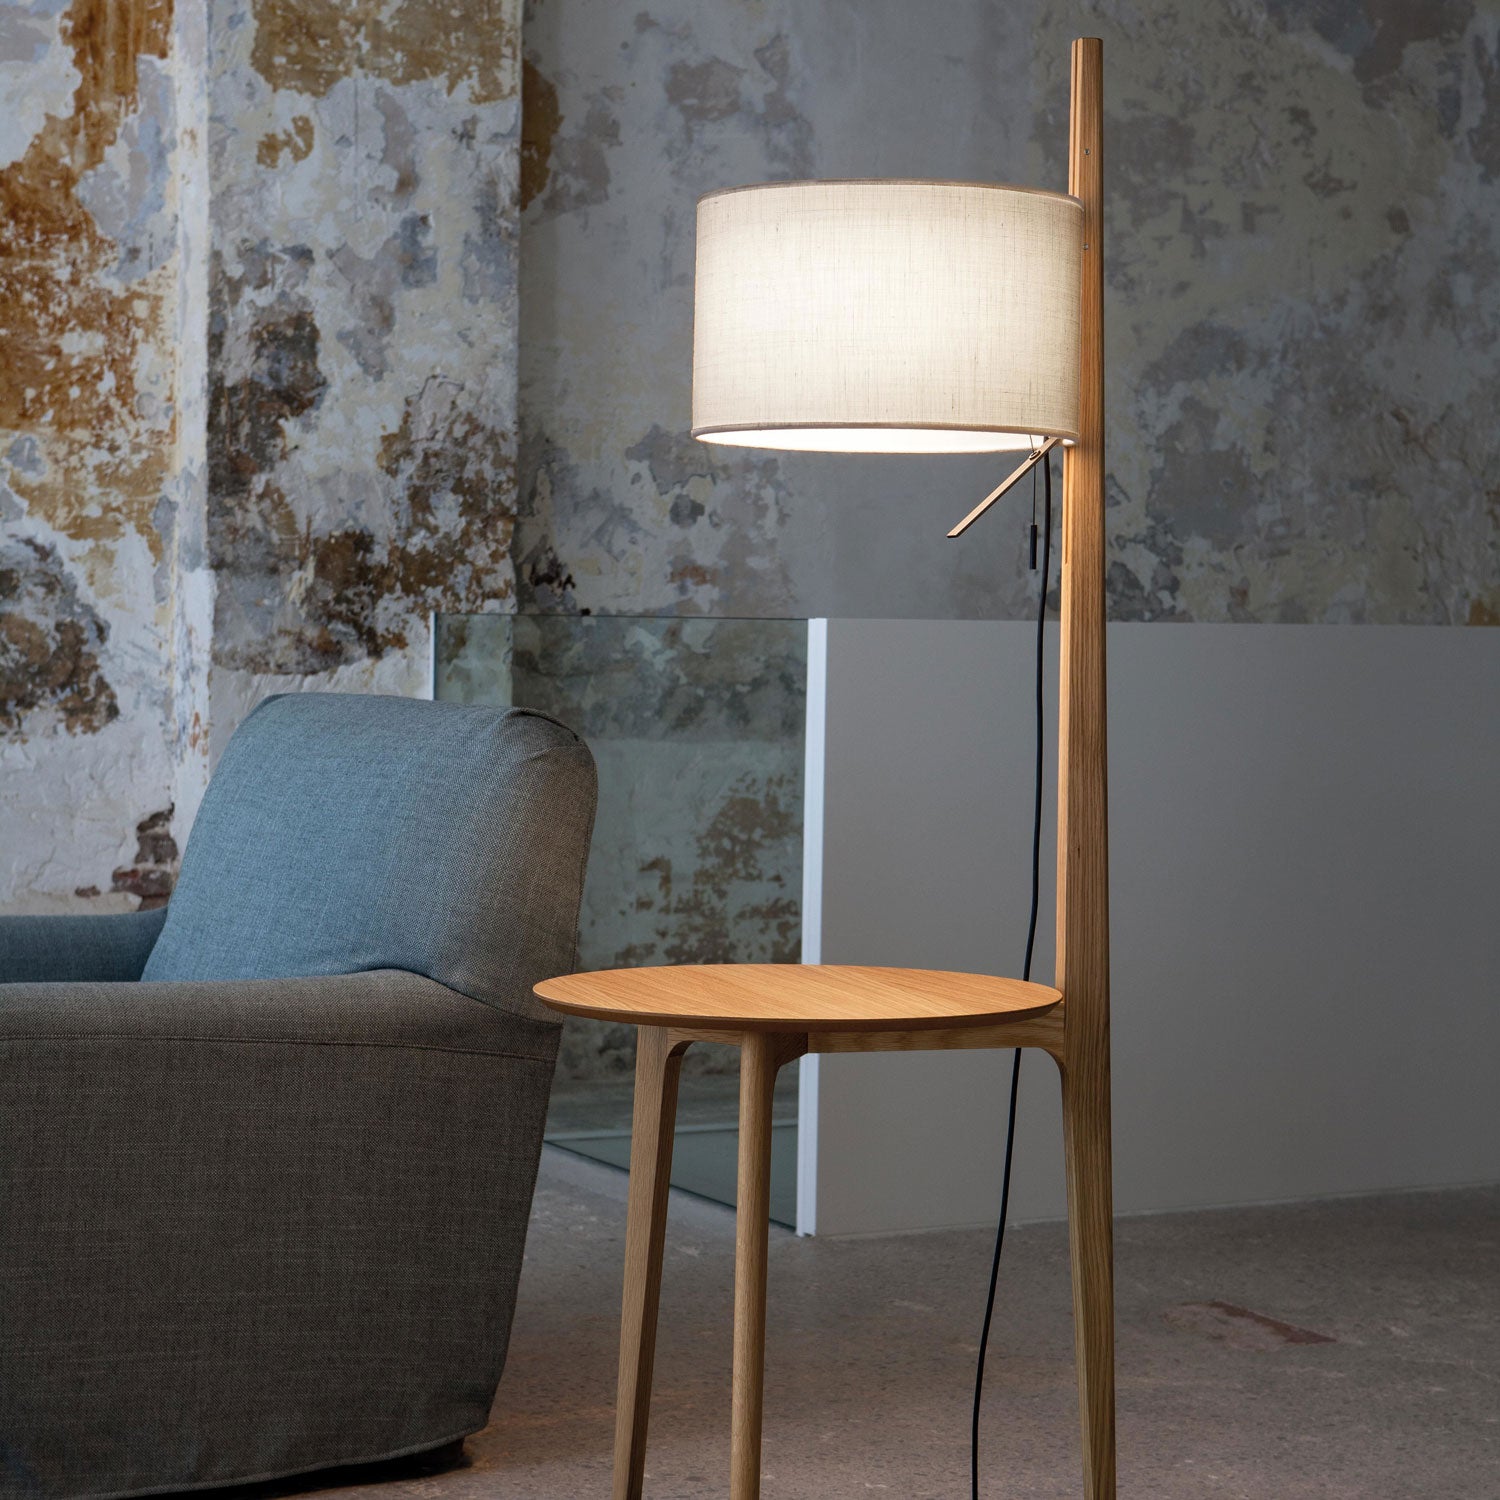 Carpyen Carla Floor Lamp with Side Table: Modern Lighting Solution